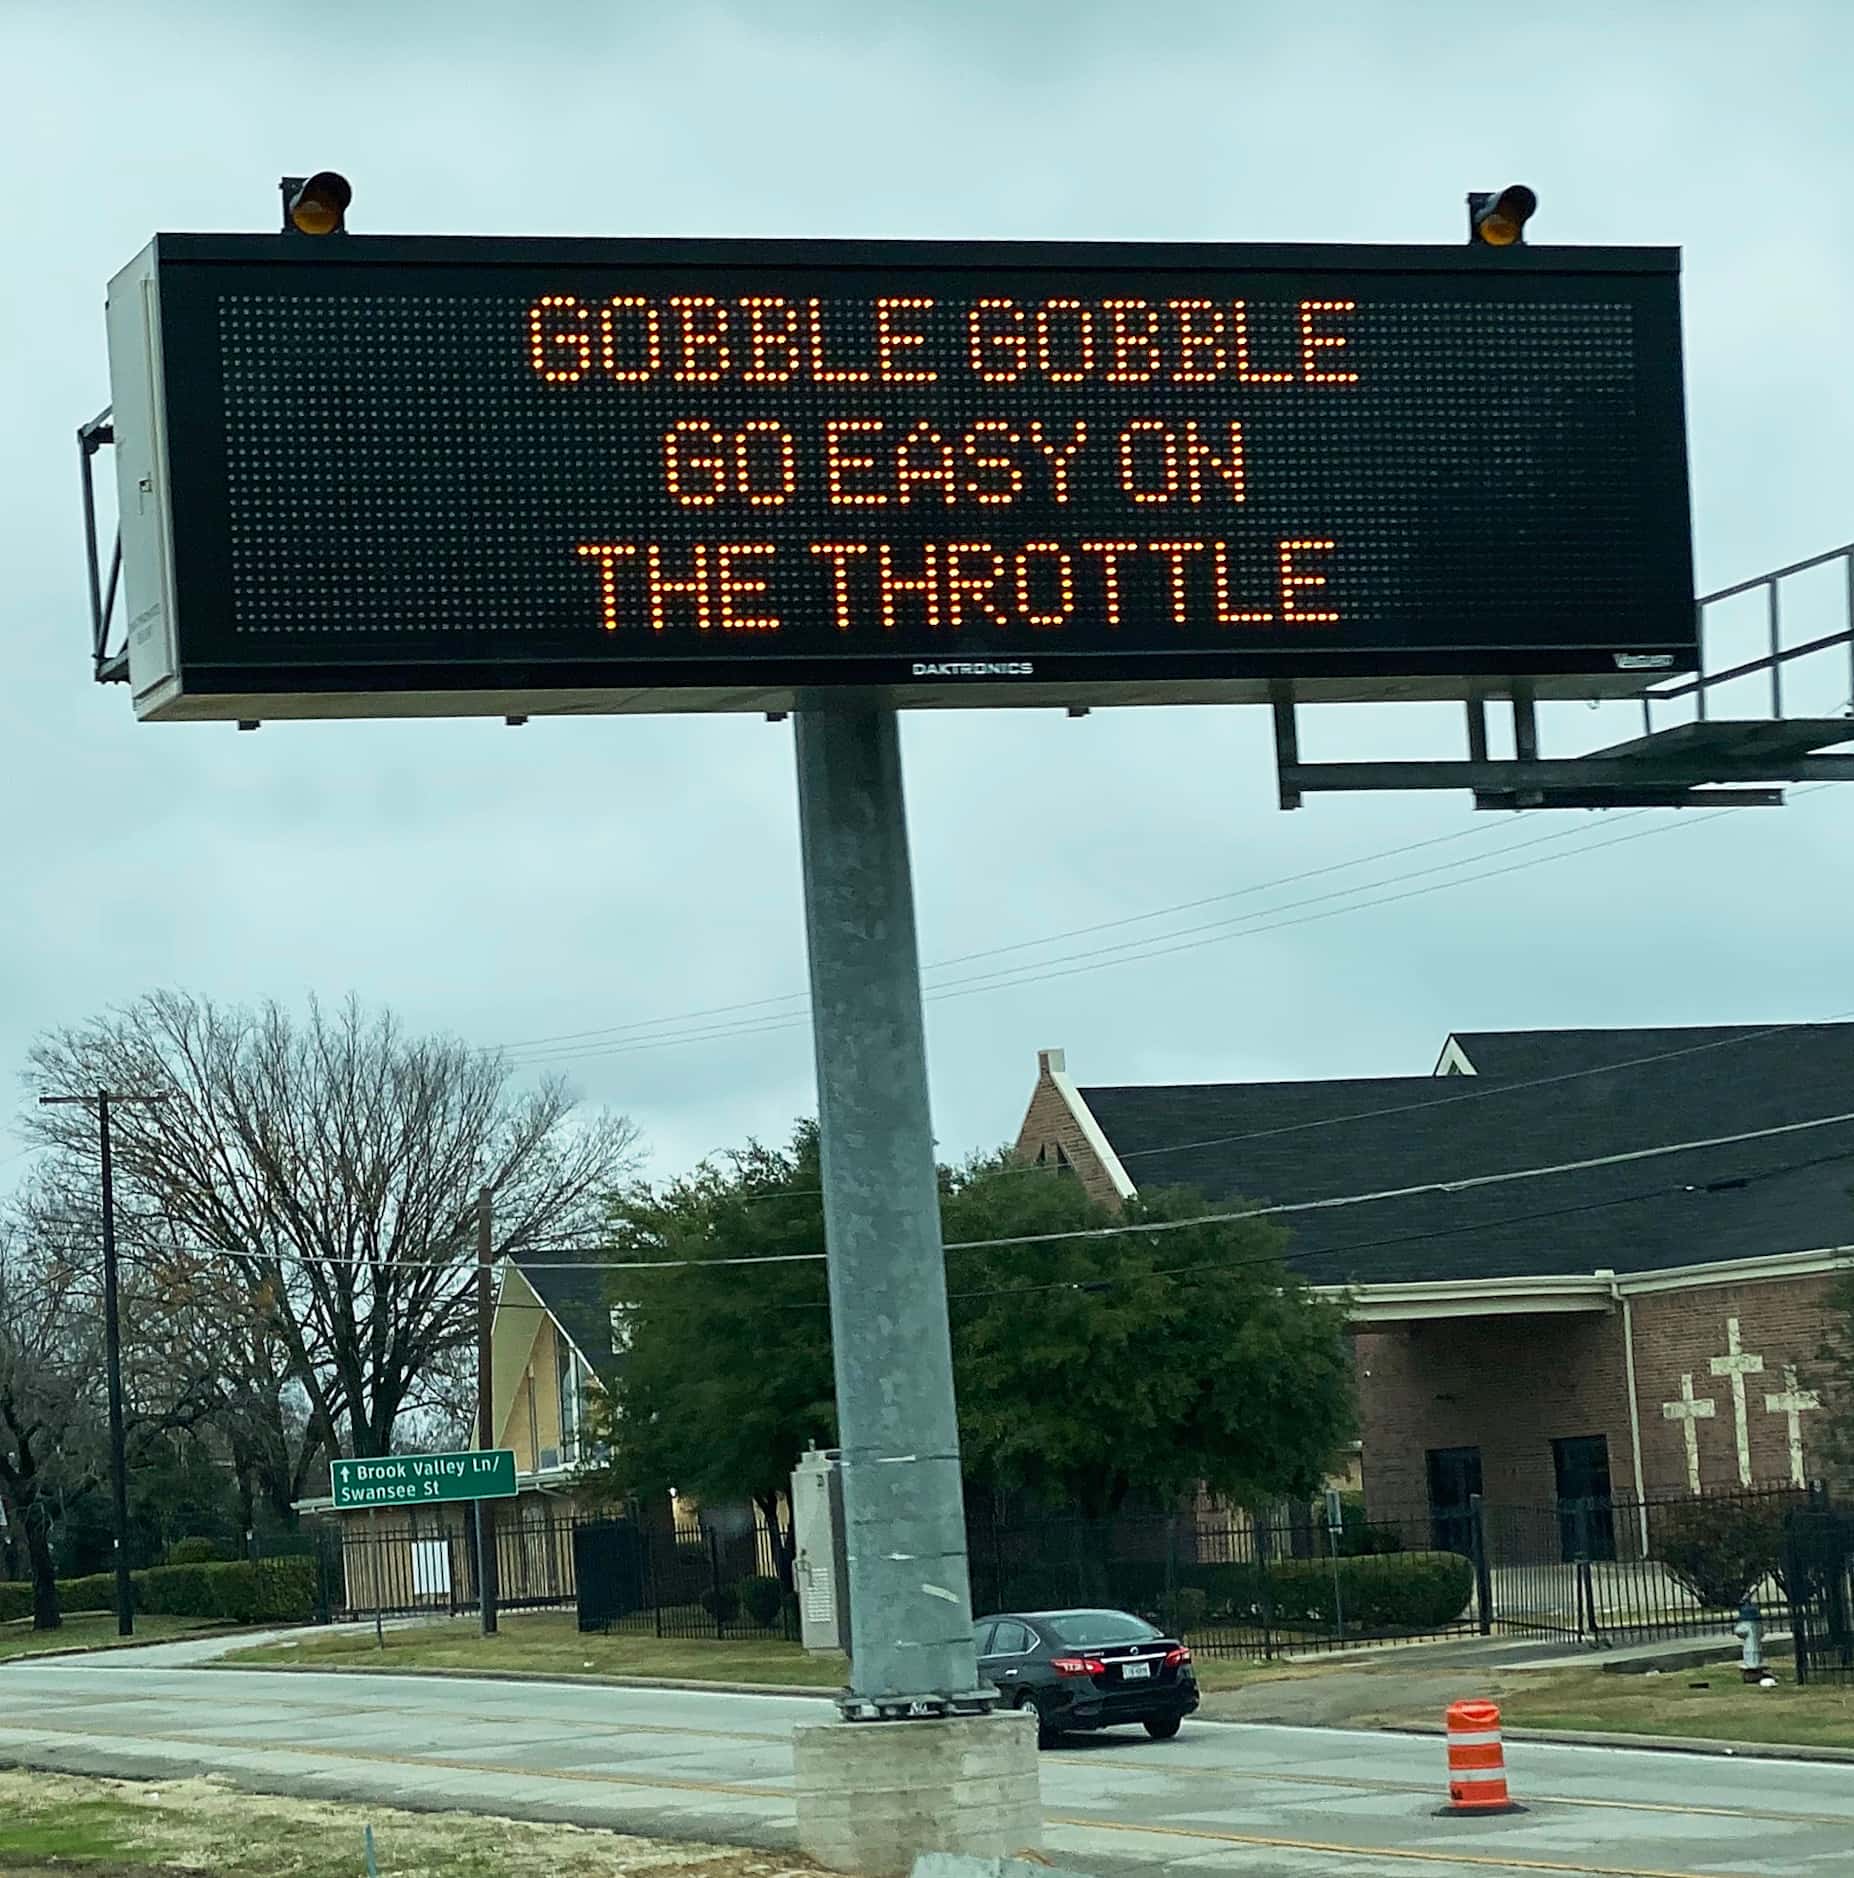 TXDOT's Thanksgiving sign" GOBBLE GOBBLE GO EASY ON THE THROTTLE" on Highway 67 in Dallas on...